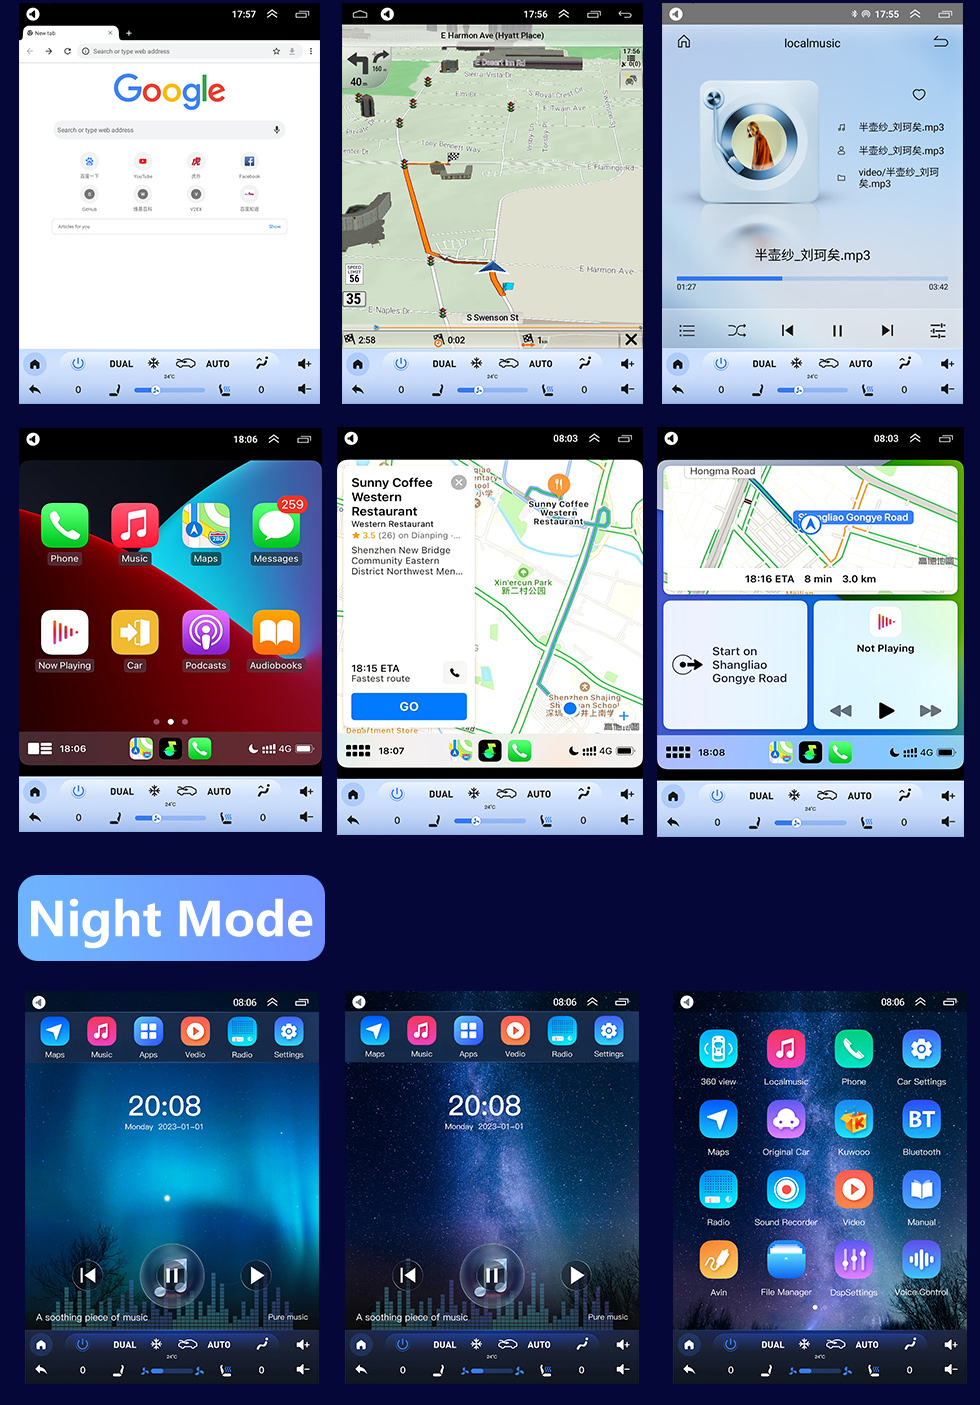 Seicane Für 2011-2013 Hyundai Avante Elantra LHD 9,7 Zoll Android 10.0 HD Touchscreen Stereo Bluetooth GPS Navigationsradio mit Wifi AUX USB Lenkradsteuerung unterstützt DVR Rückfahrkamera OBD